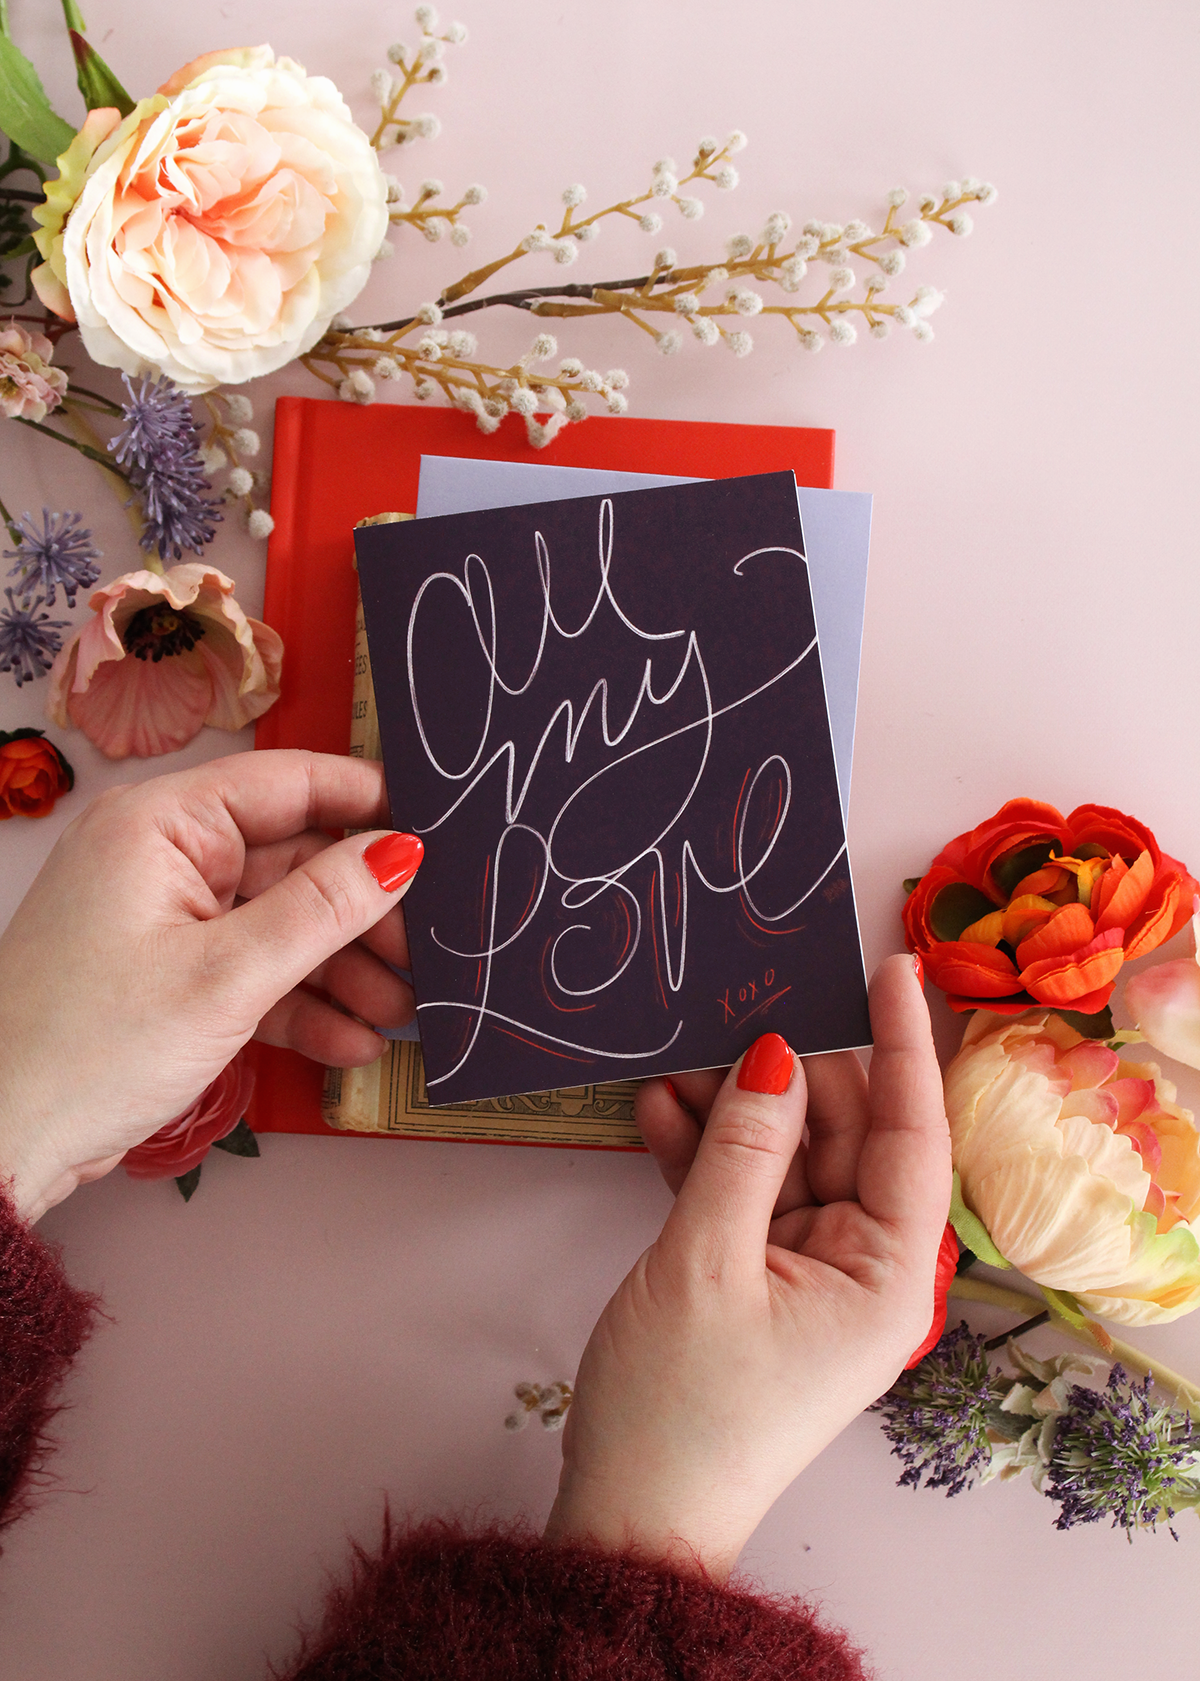 All my love handwritten card for Valentine's Day